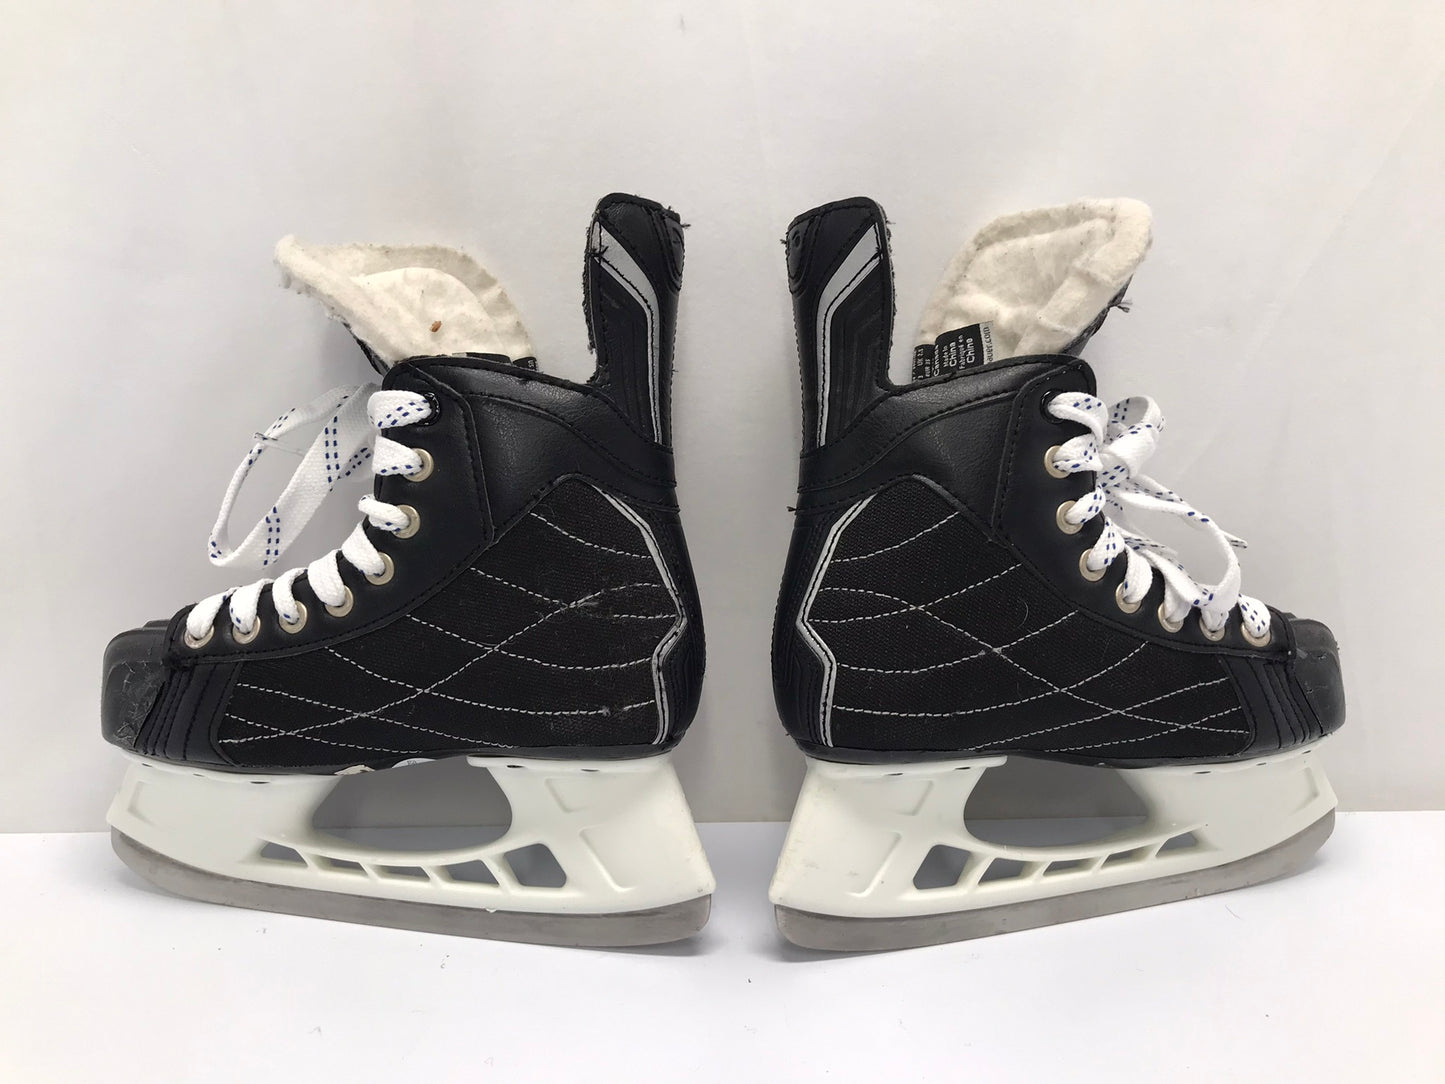 Hockey Skates Child Size 3 Shoe Size Bauer Nexus As New